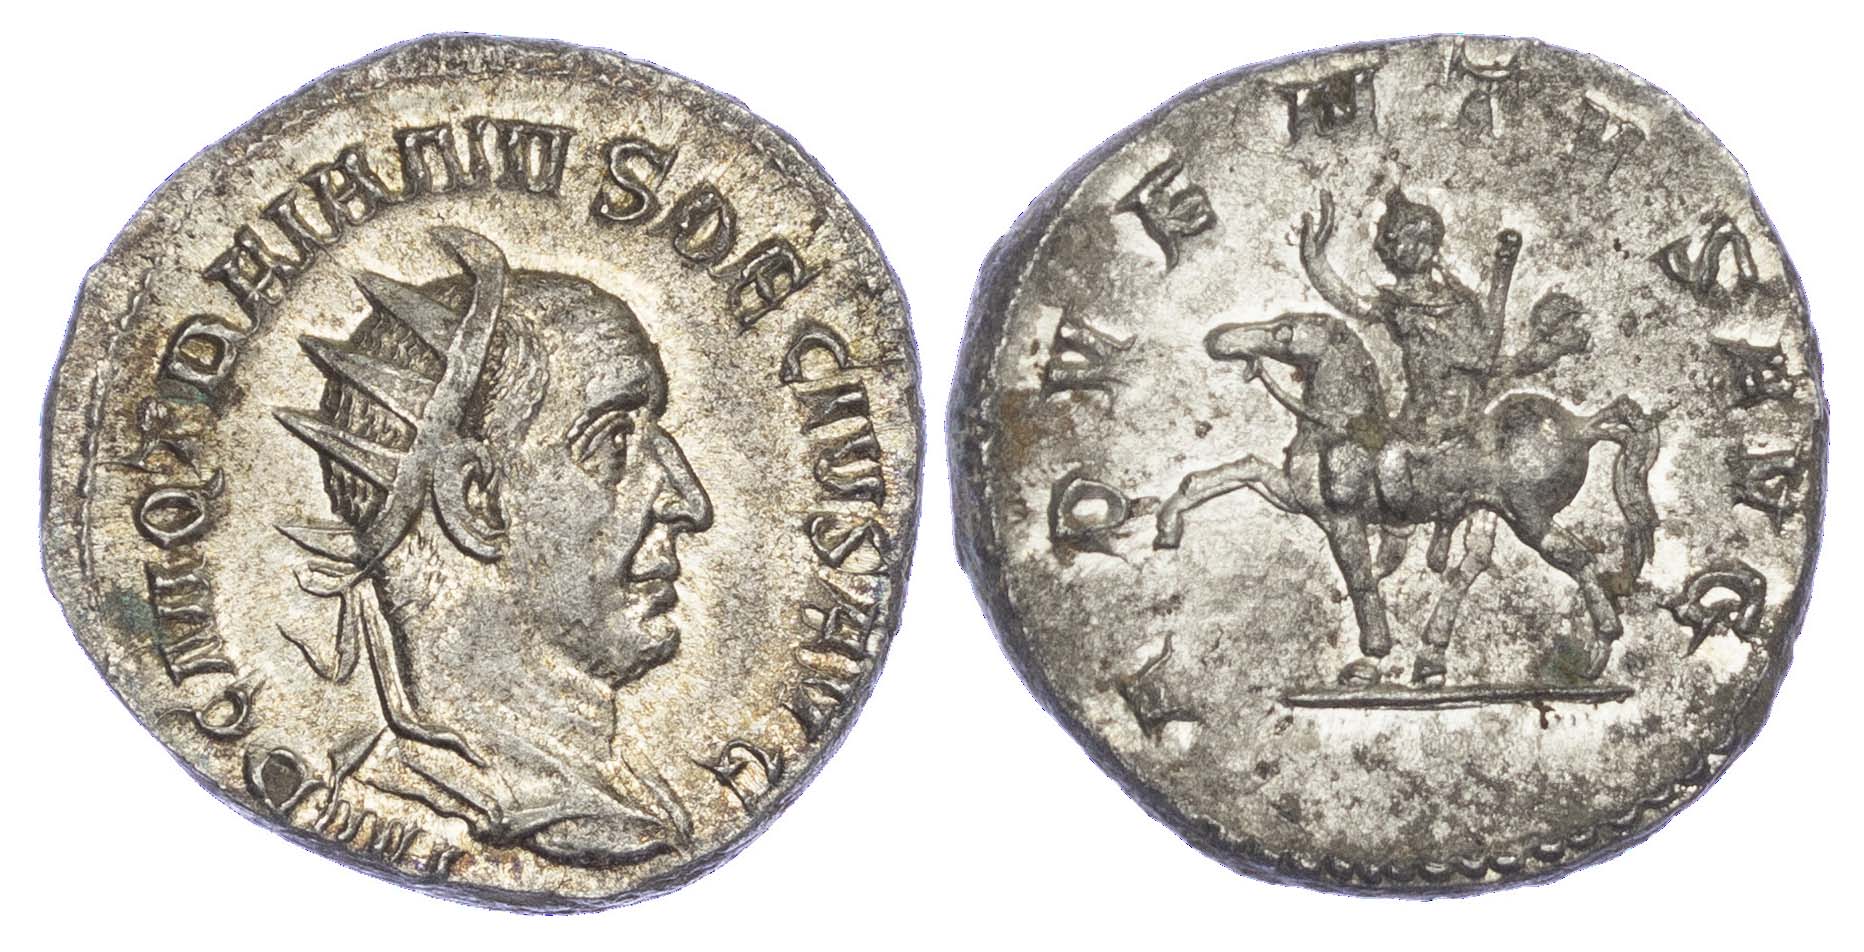 Trajan Decius, Silver Antoninianus